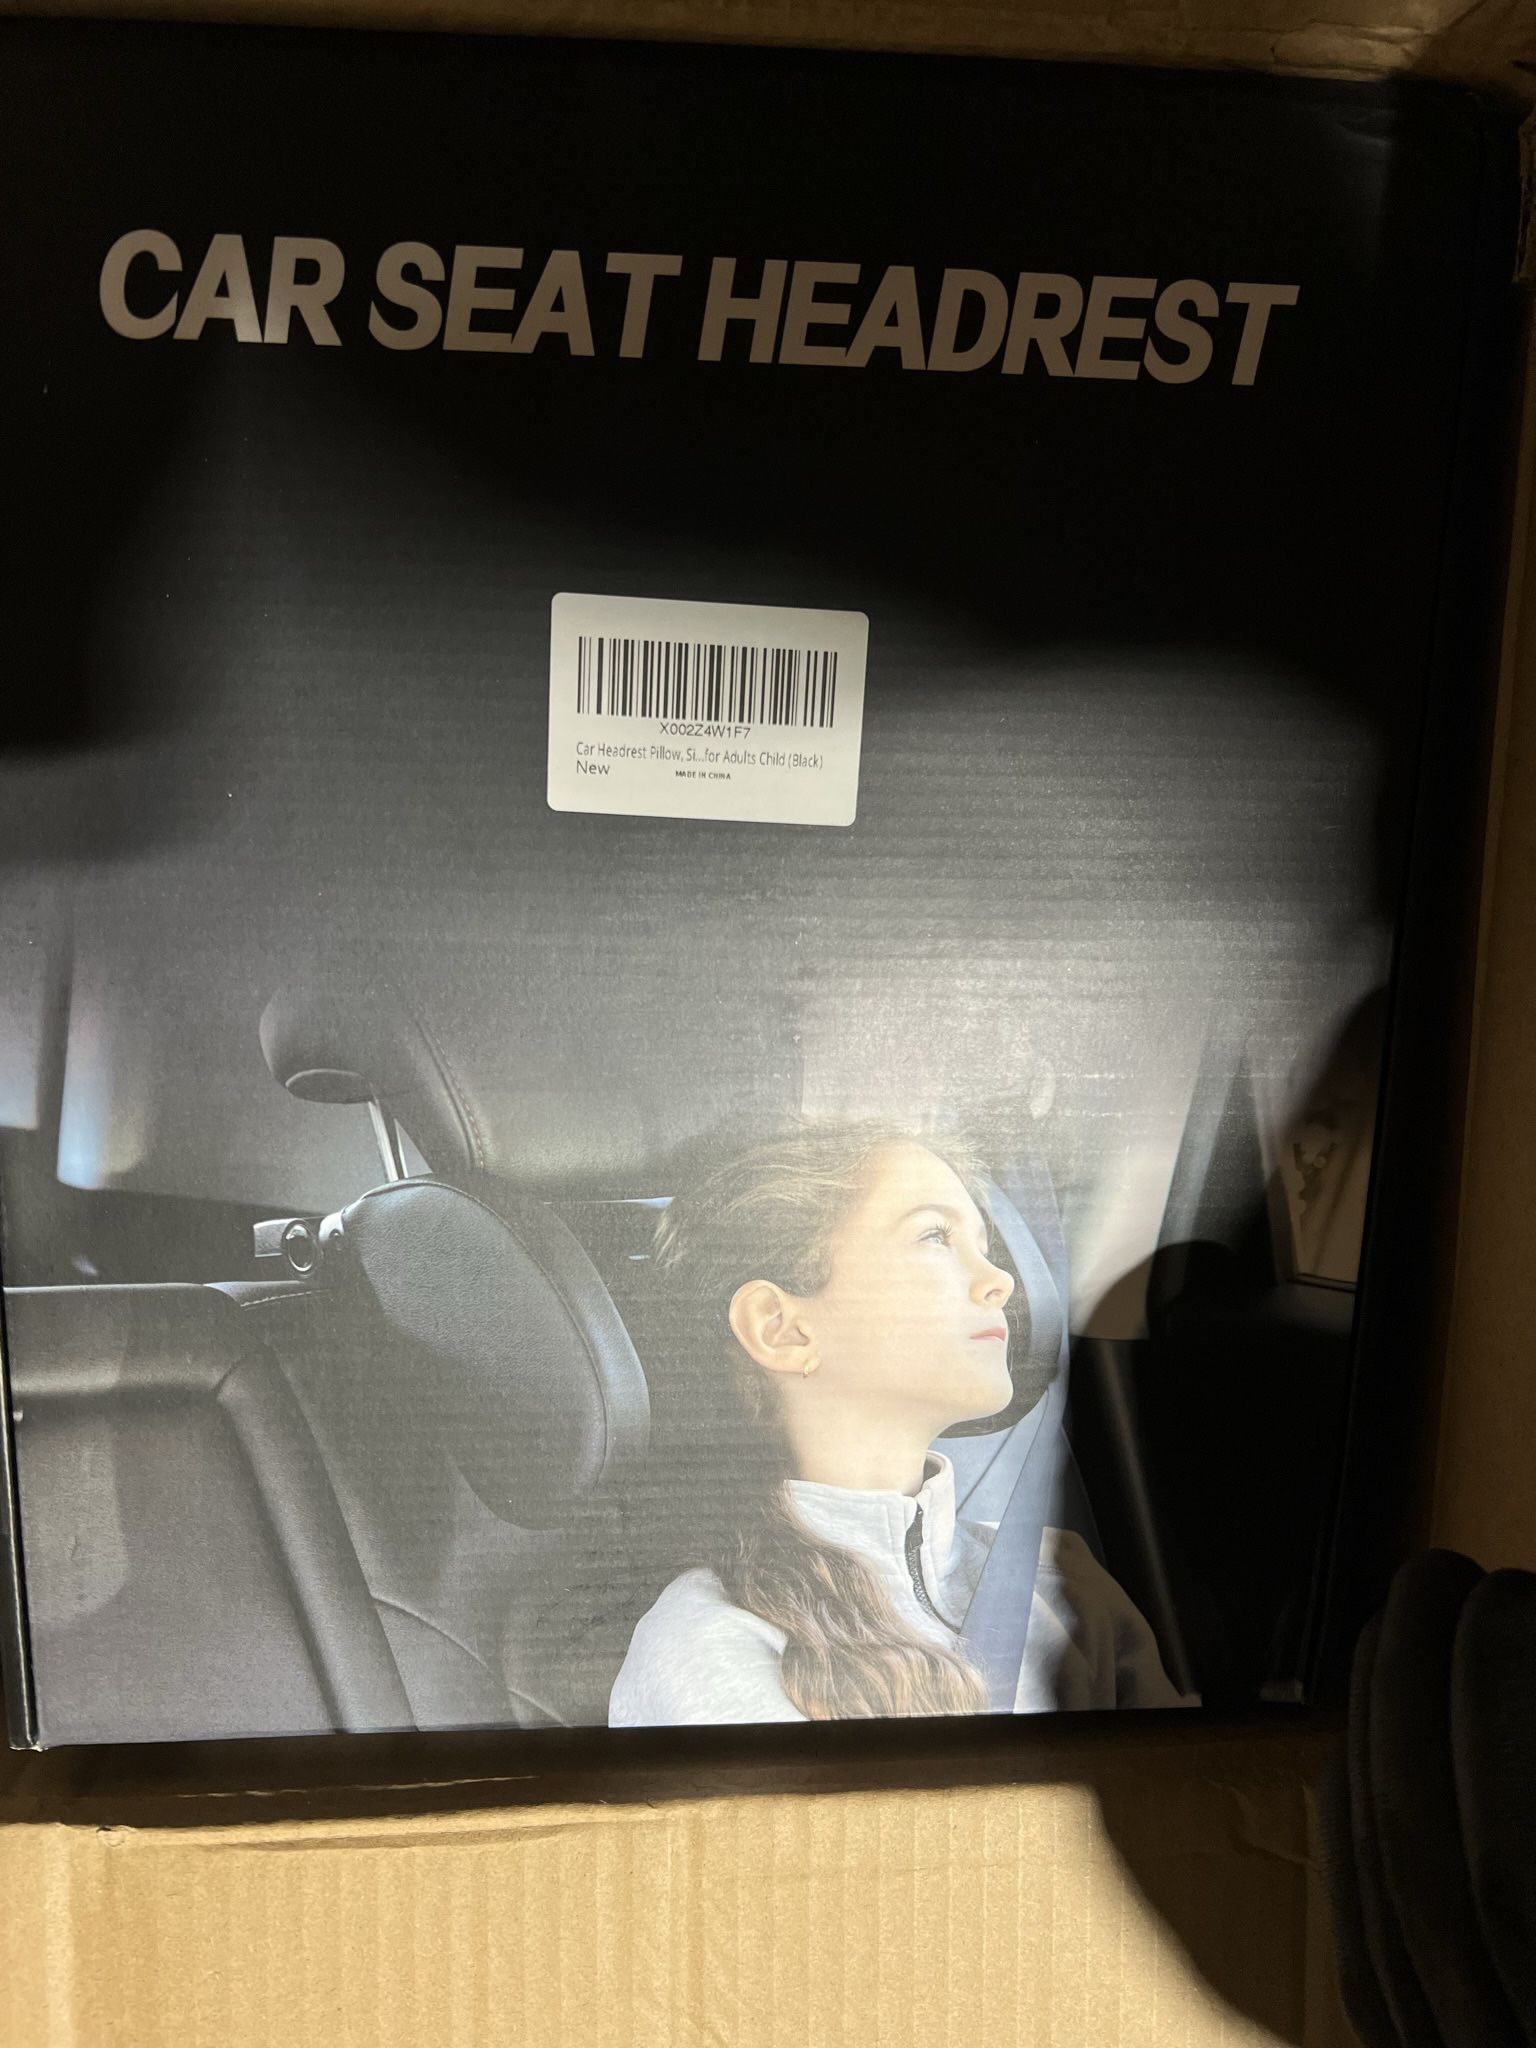 HOTBEST Car Seat Head Neck Support Headrest Pillow Travel Detachable Sleeping Cushion